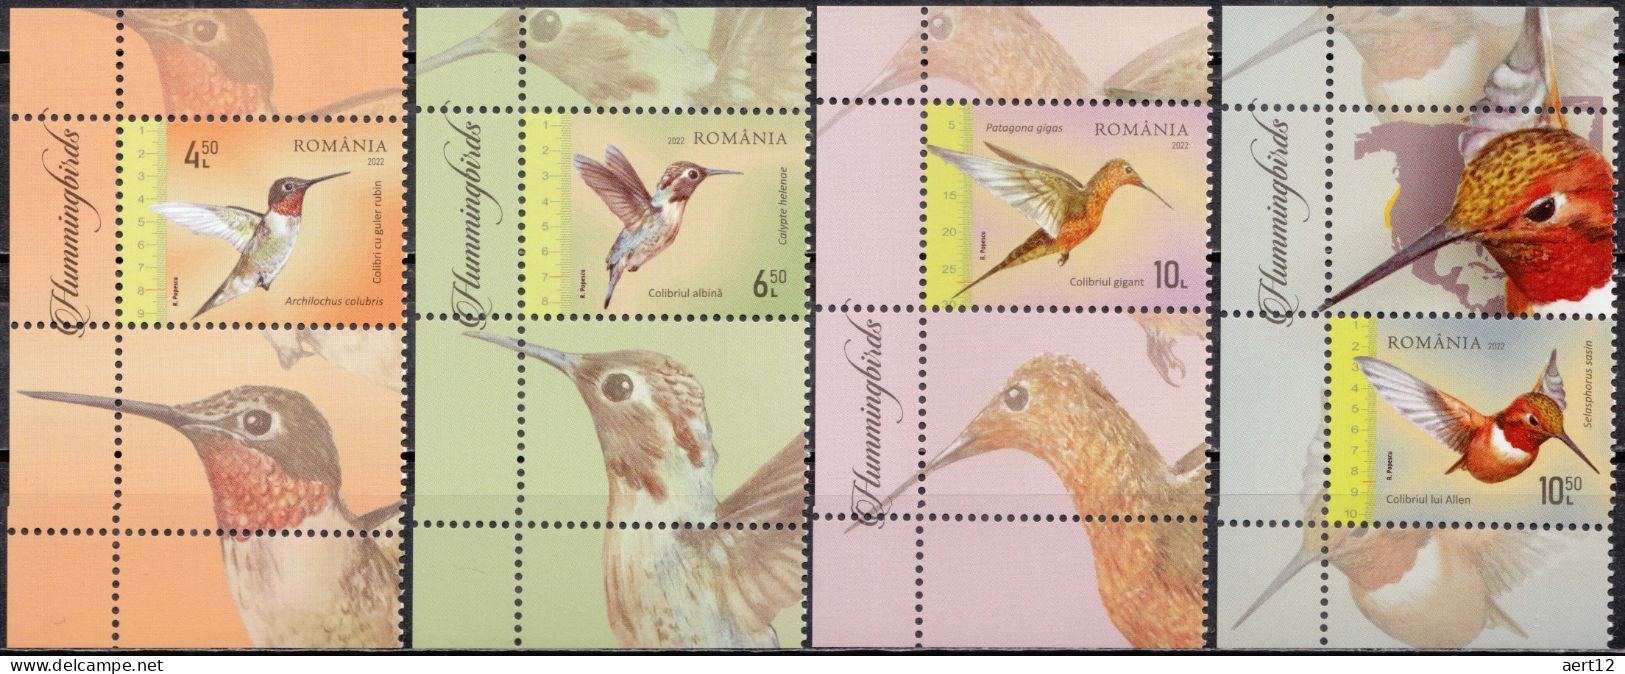 2022, Romania, Hummingbirds, Animals (Fauna), Birds, 4 Stamps+Label M1, MNH(**), LPMP 2379 - Unused Stamps